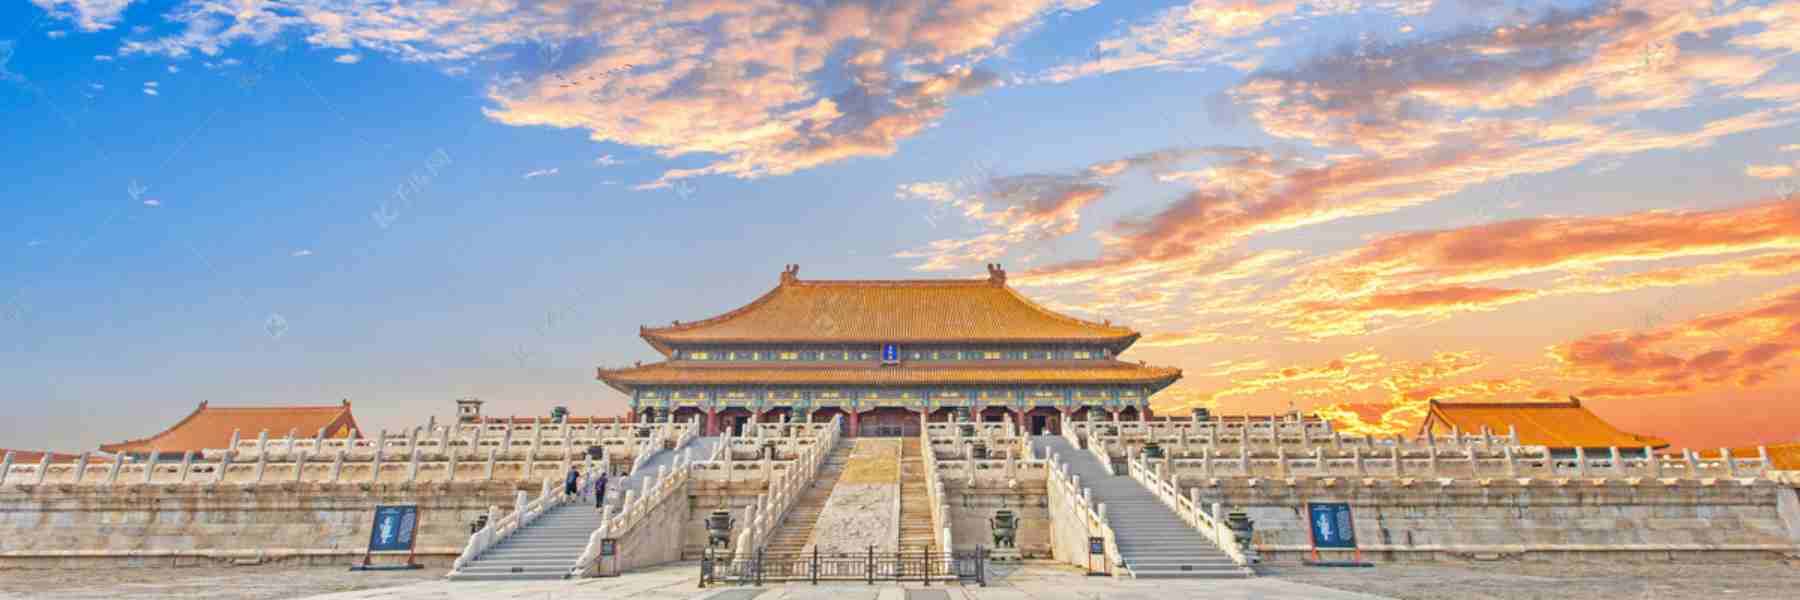 7-Day China Classic Tour of Hong Kong, Beijing, and Shanghai